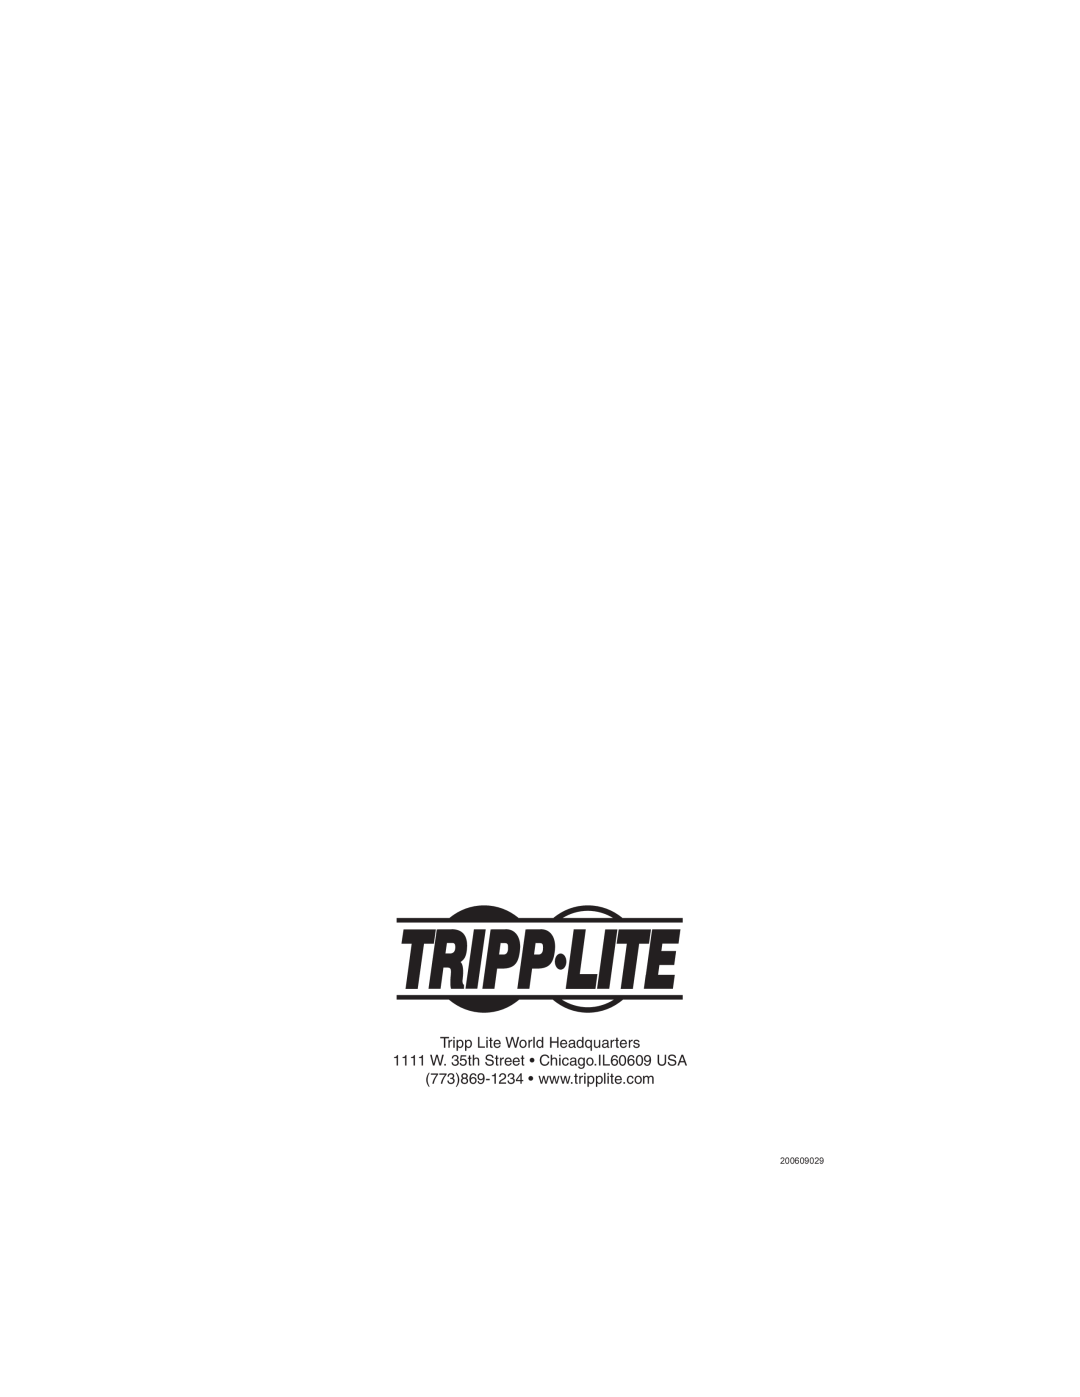 Tripp Lite IN3004KBM specifications Tripp Lite World Headquarters, 1111 W. 35th Street Chicago.IL60609 USA, 200609029 